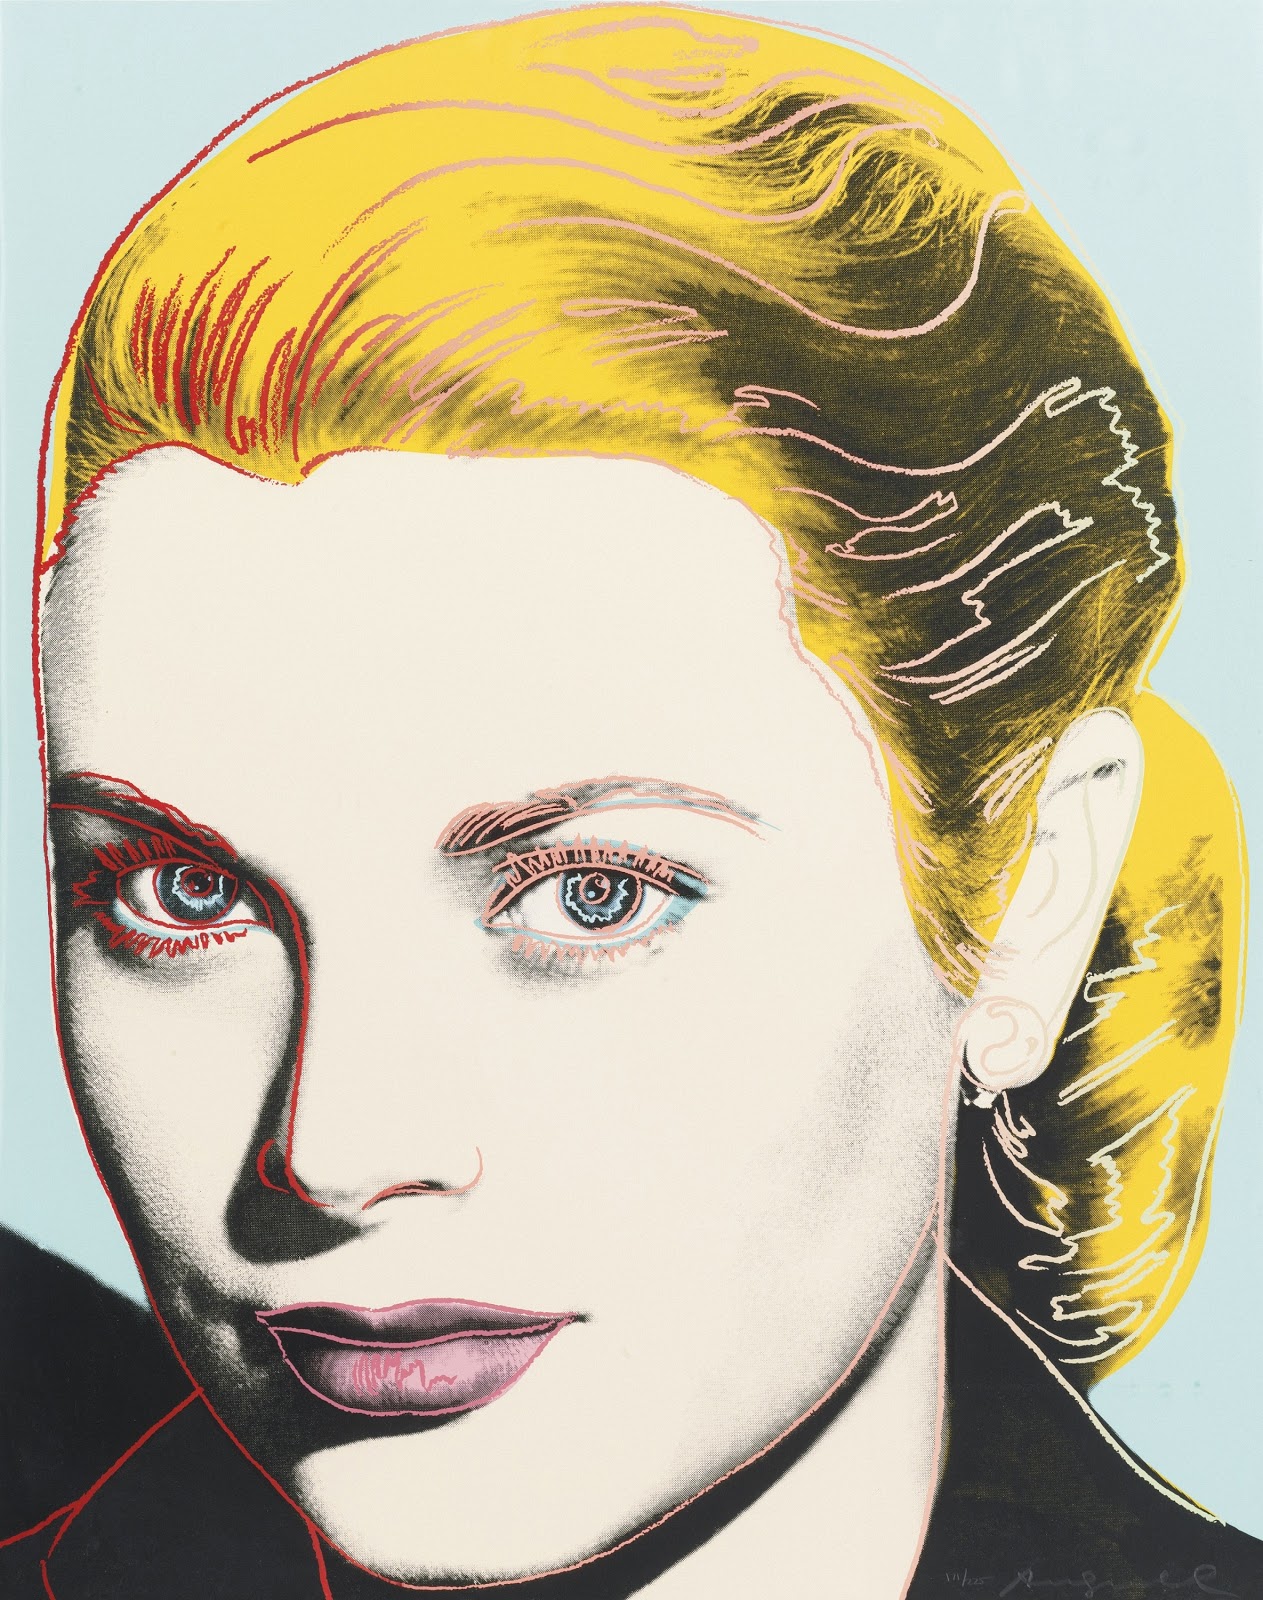 Andy+Warhol-1928-1987 (58).jpg